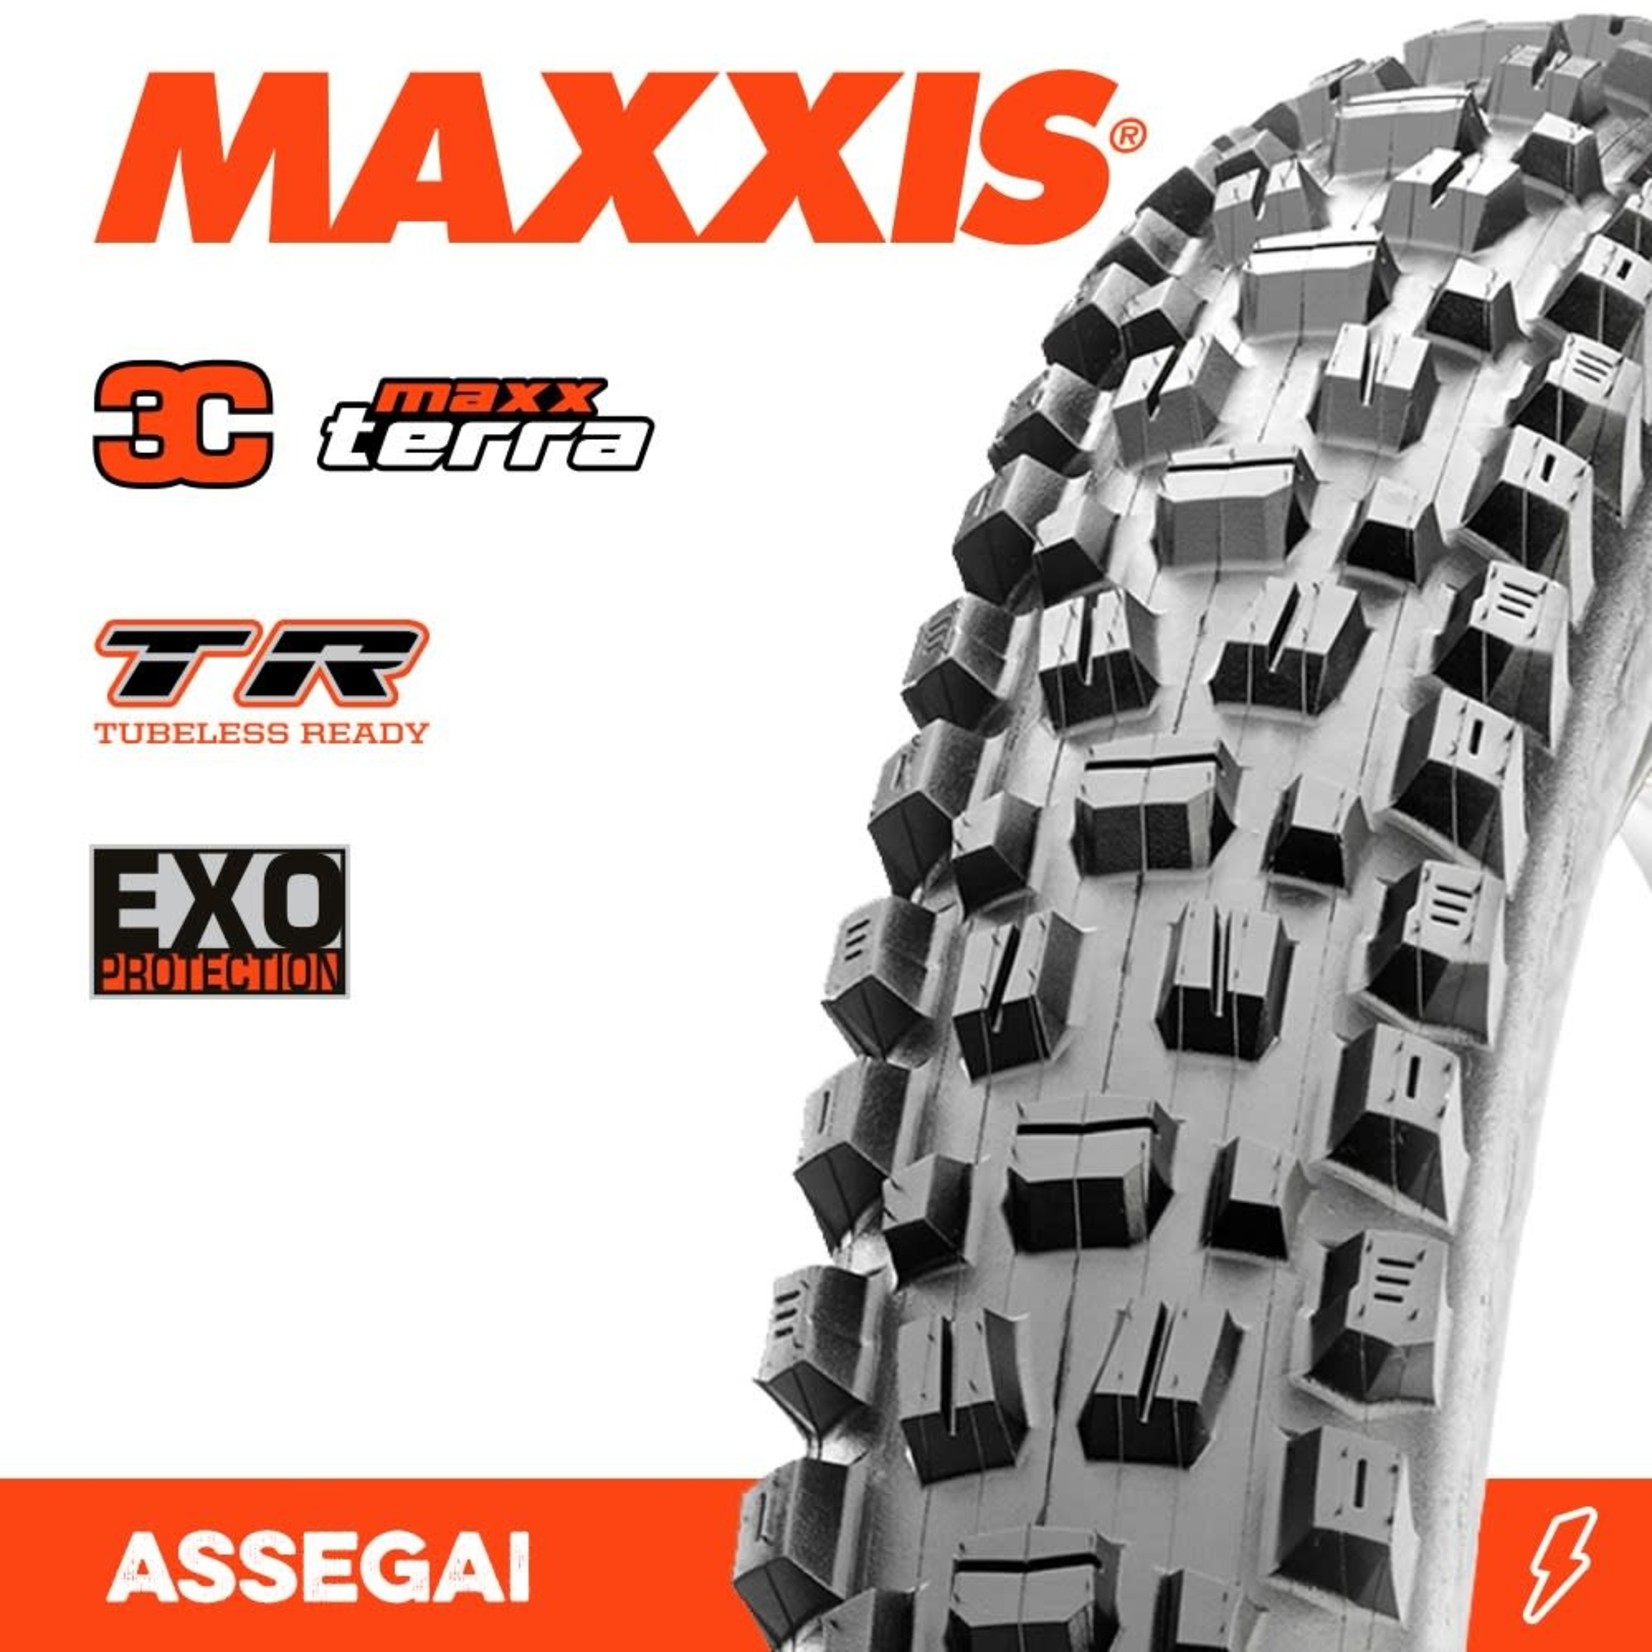 Maxxis Maxxis Assegai Bike Tyre - 29 X 2.50 - 3C Terra Exo TR Folding 60TPI - Pair